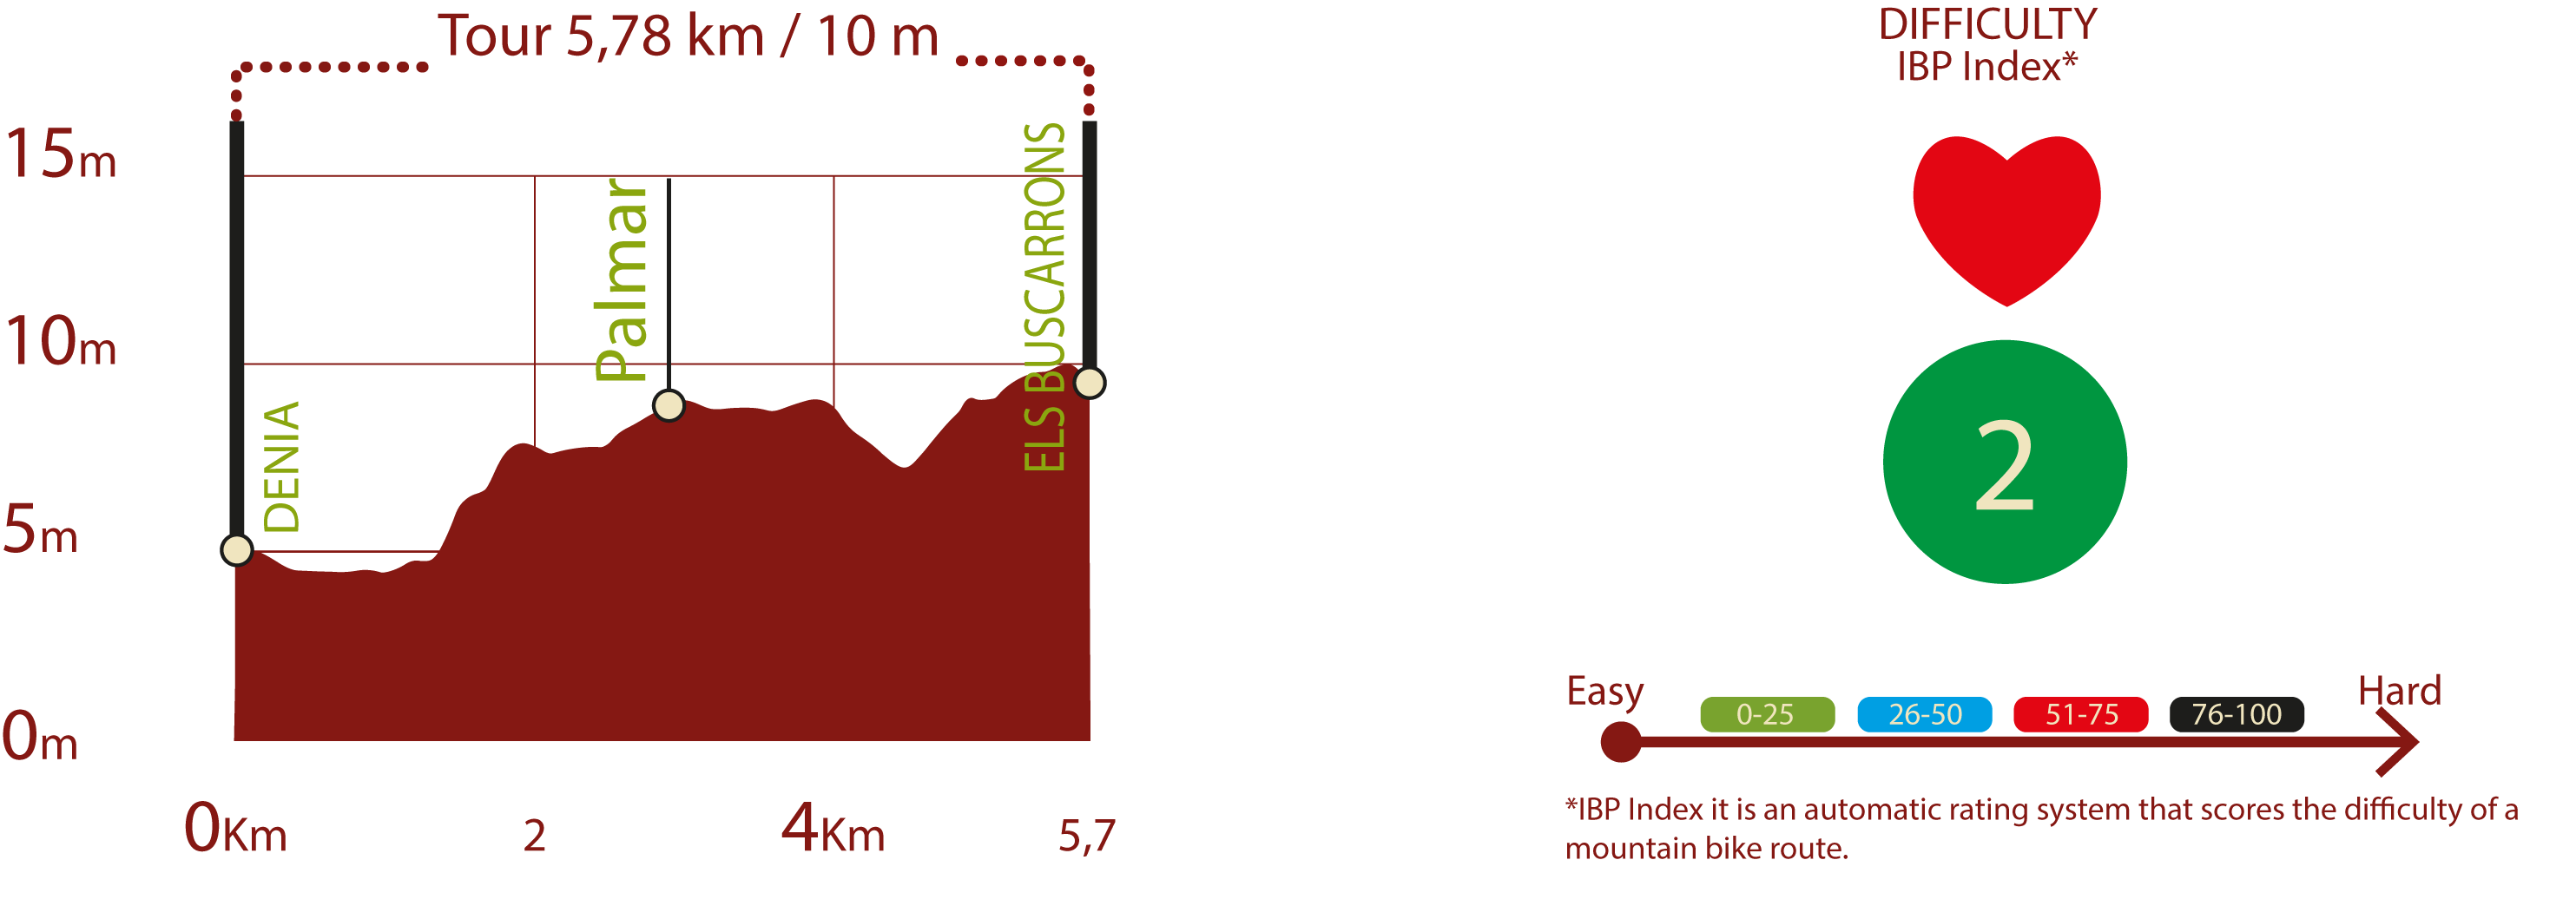 Profile & IBP
Profile of Dénia NT: 15,52 km/ 10 m upward gradient
IBP 2: Easy

